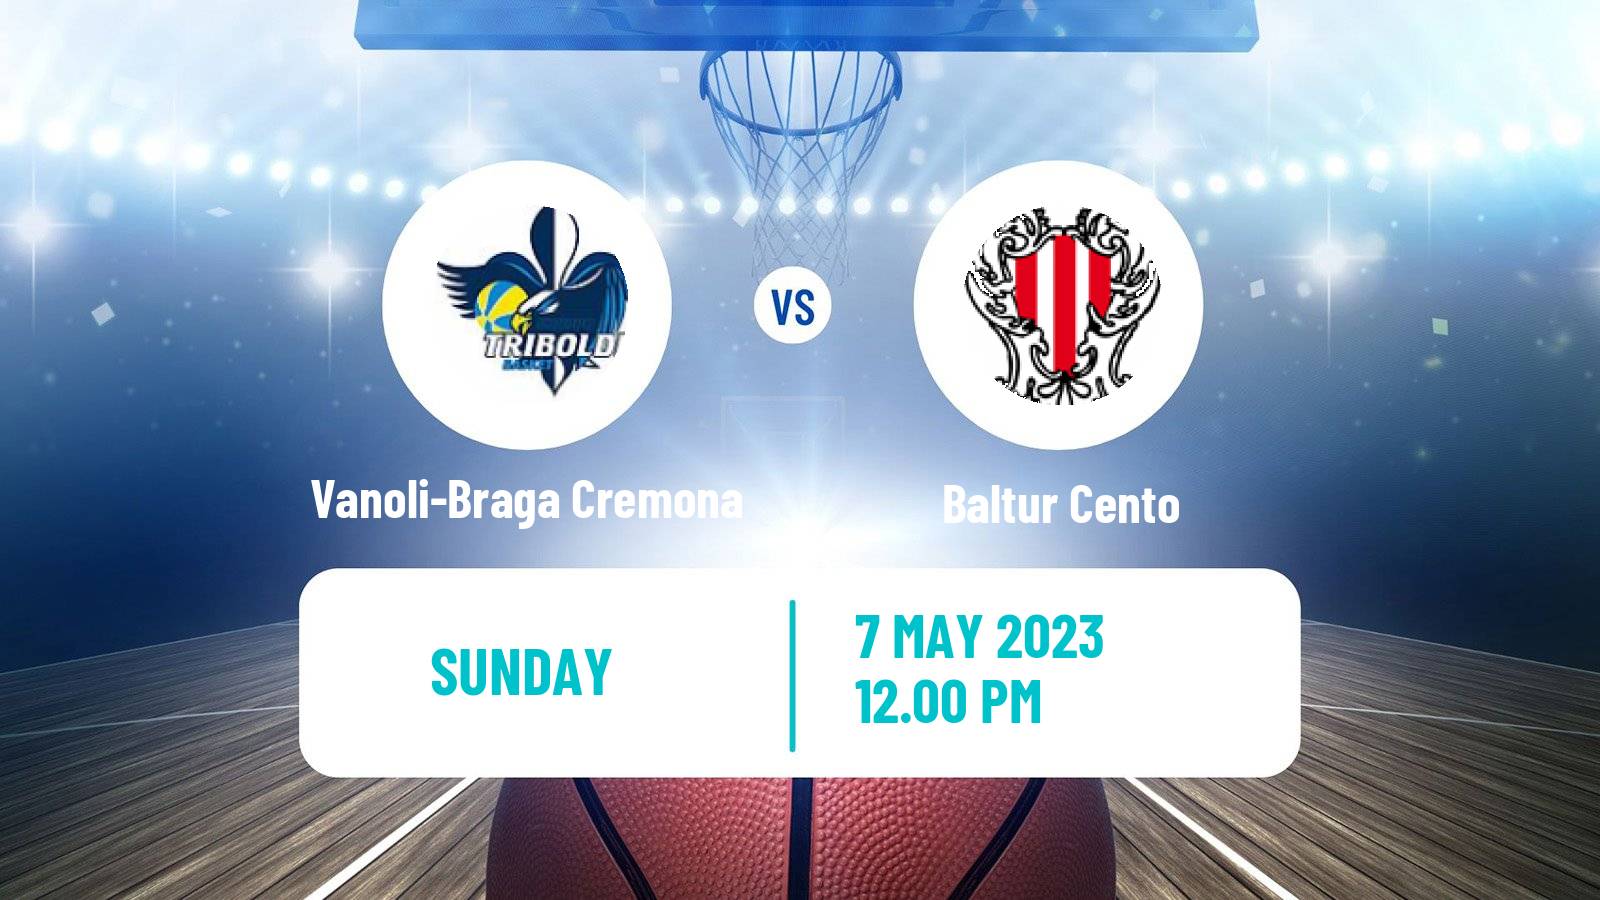 Basketball Italian Serie A2 Basketball Vanoli-Braga Cremona - Baltur Cento